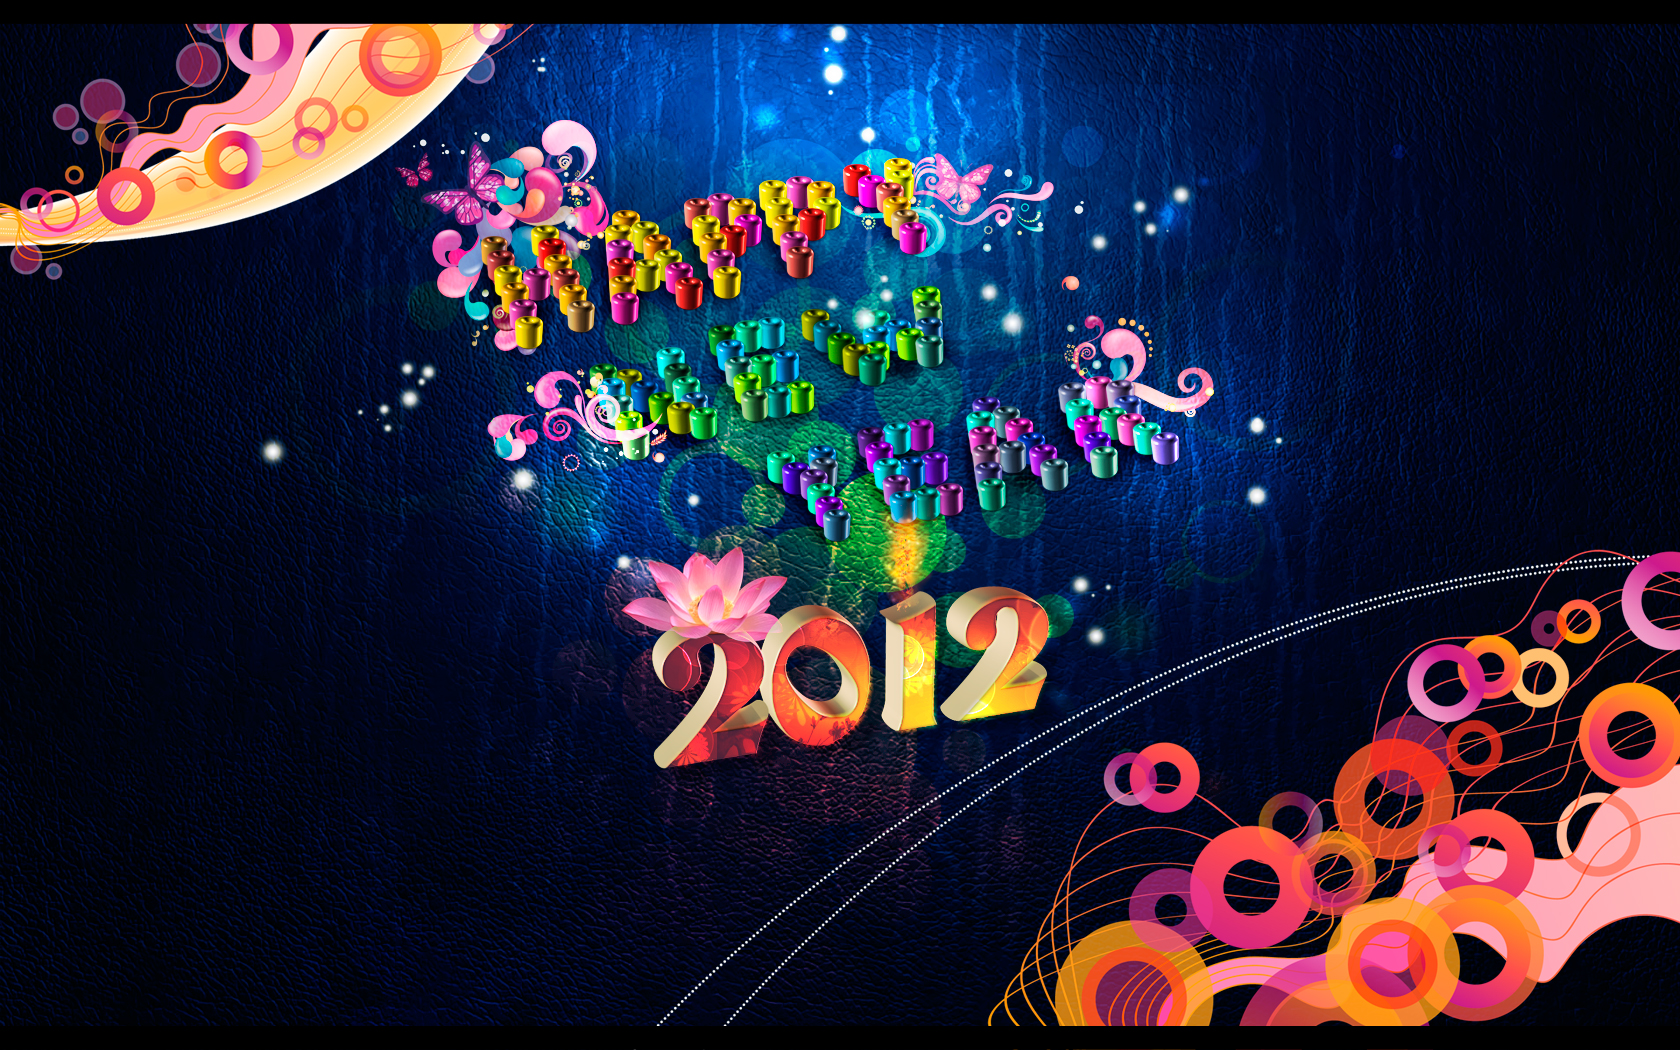 http://fc05.deviantart.net/fs71/f/2011/292/4/e/happy_new_year_2012_by_aeli9-d4dbshn.jpg